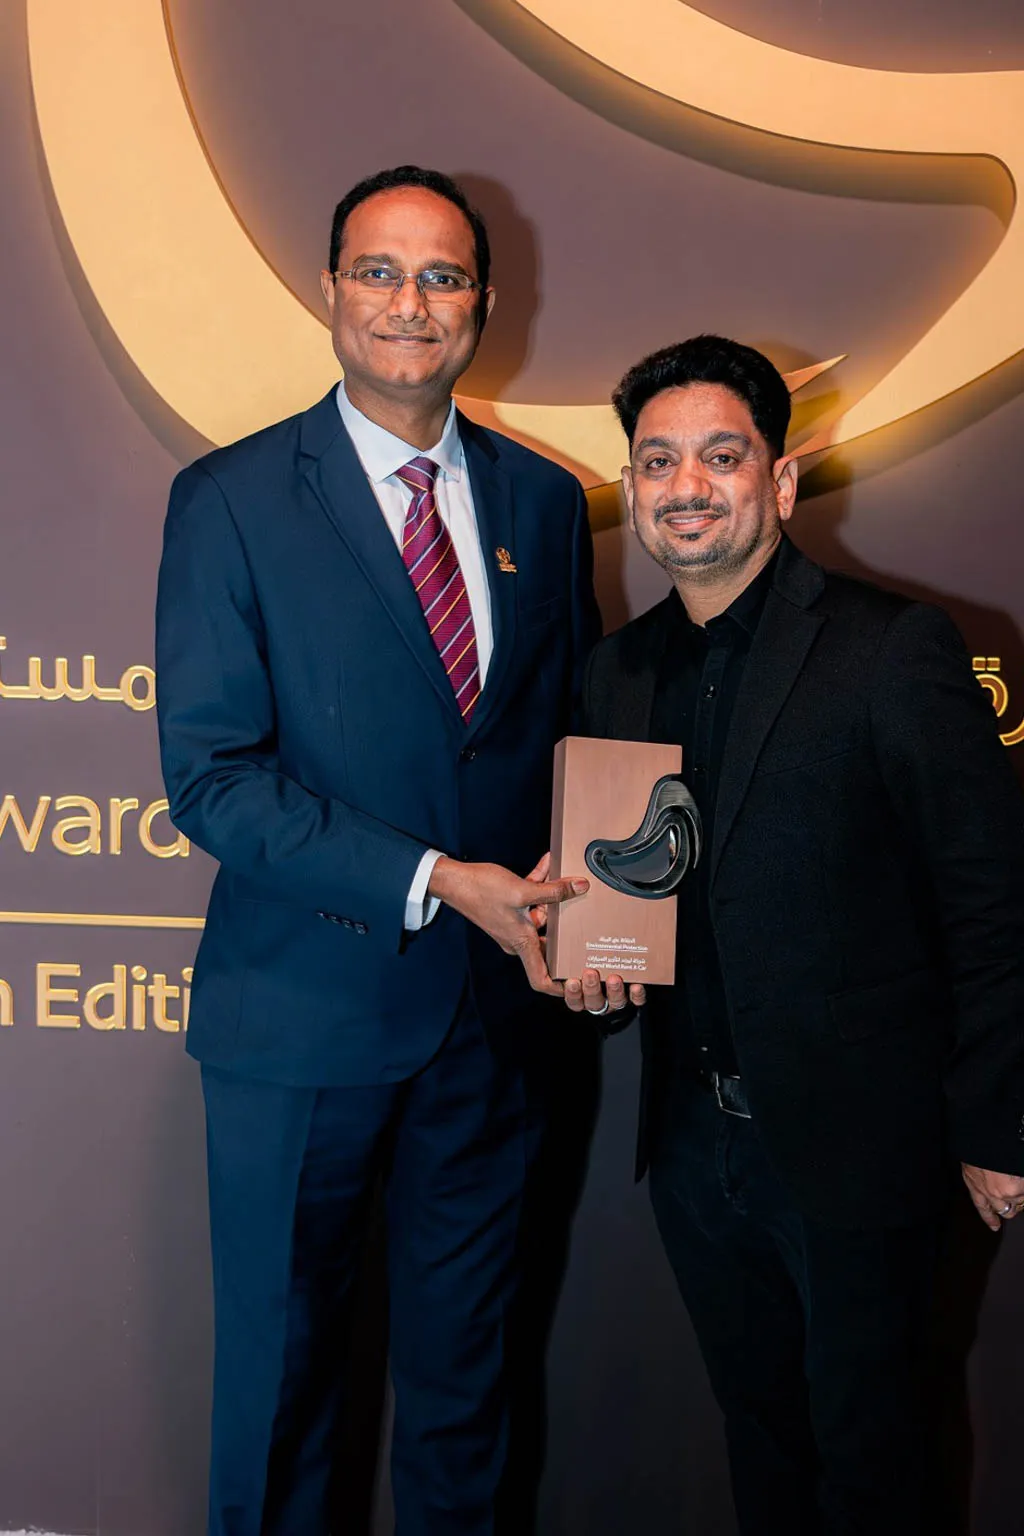 # 005 Of 009 Dubai Sustrans Award July 04, 2019